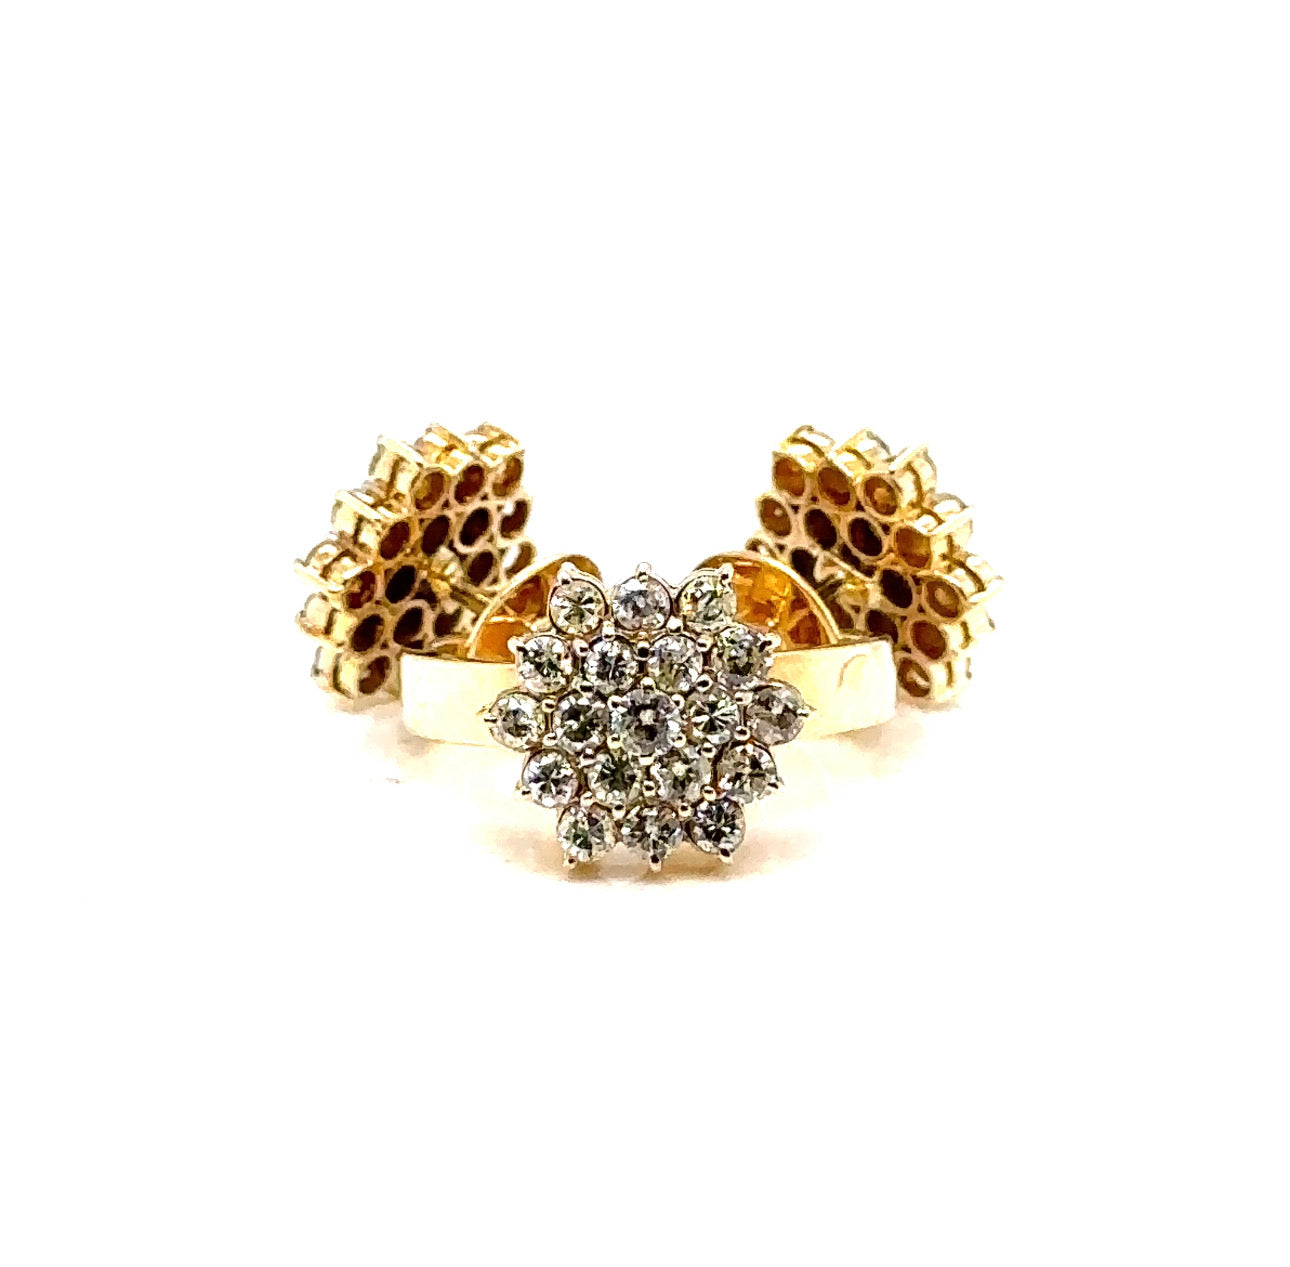 14KY Estate Diamond Cluster Fashion Ring & Earrings